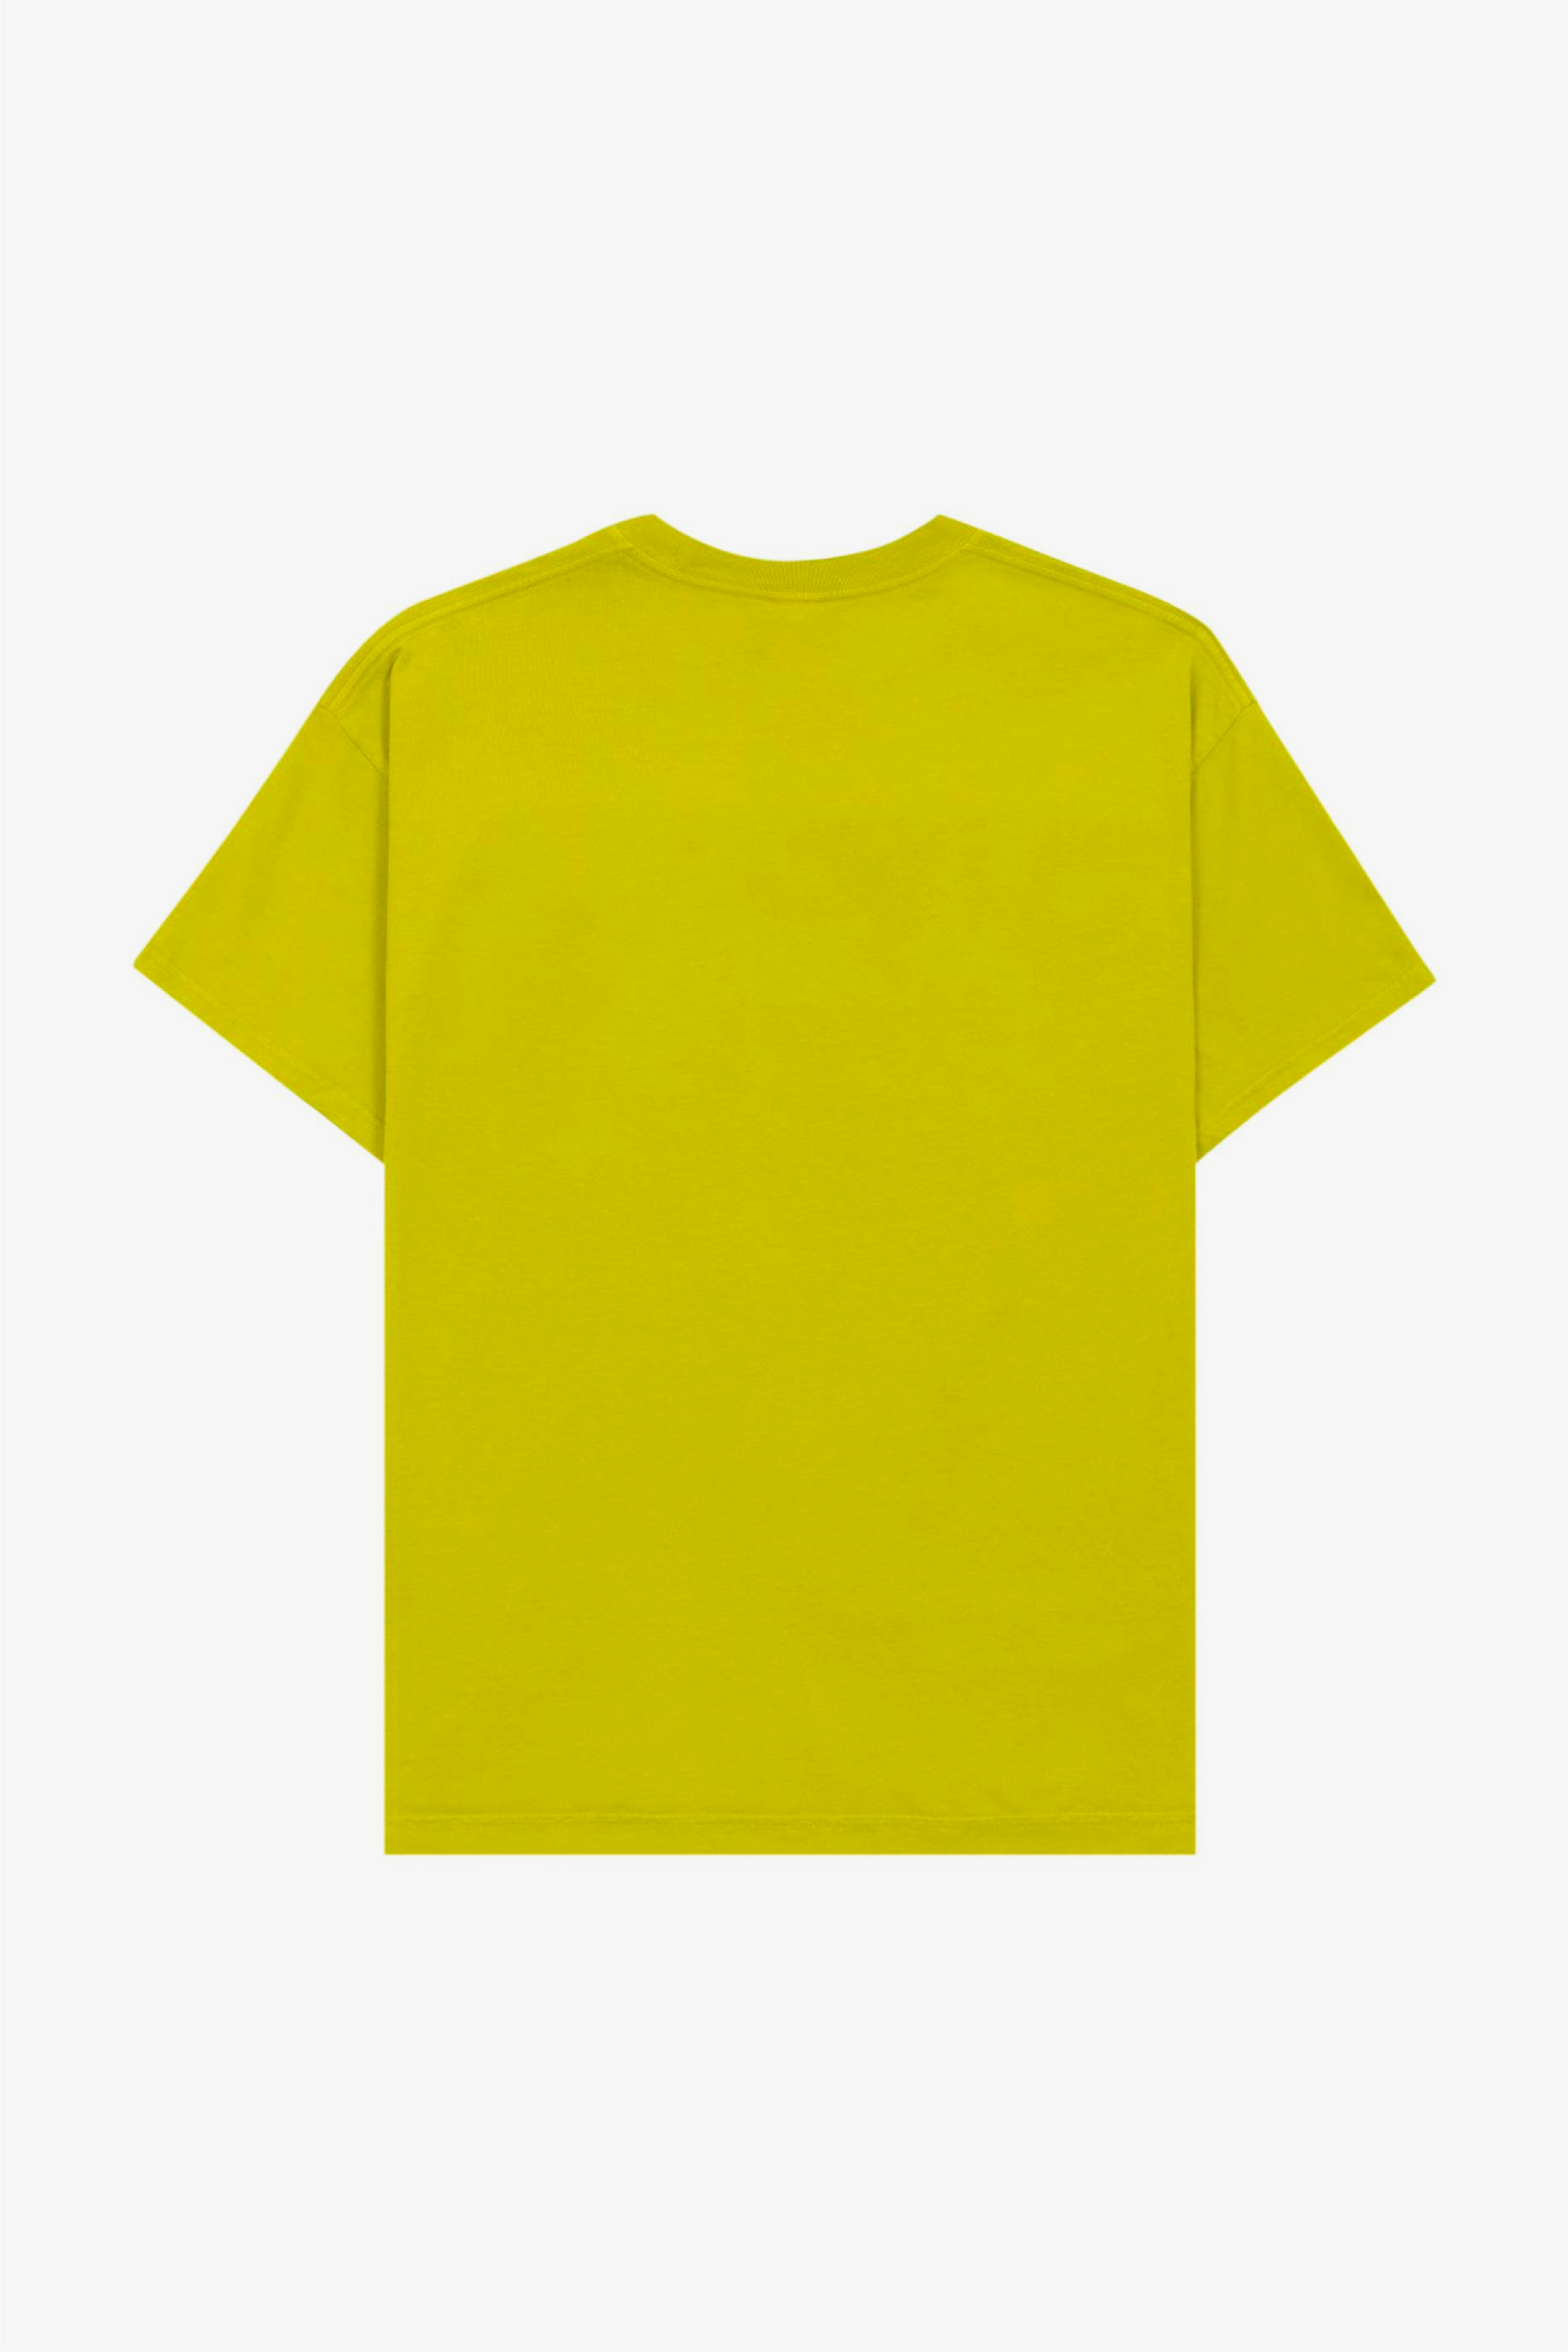 Selectshop FRAME - BRAIN DEAD Small Fry Tee T-Shirts Dubai